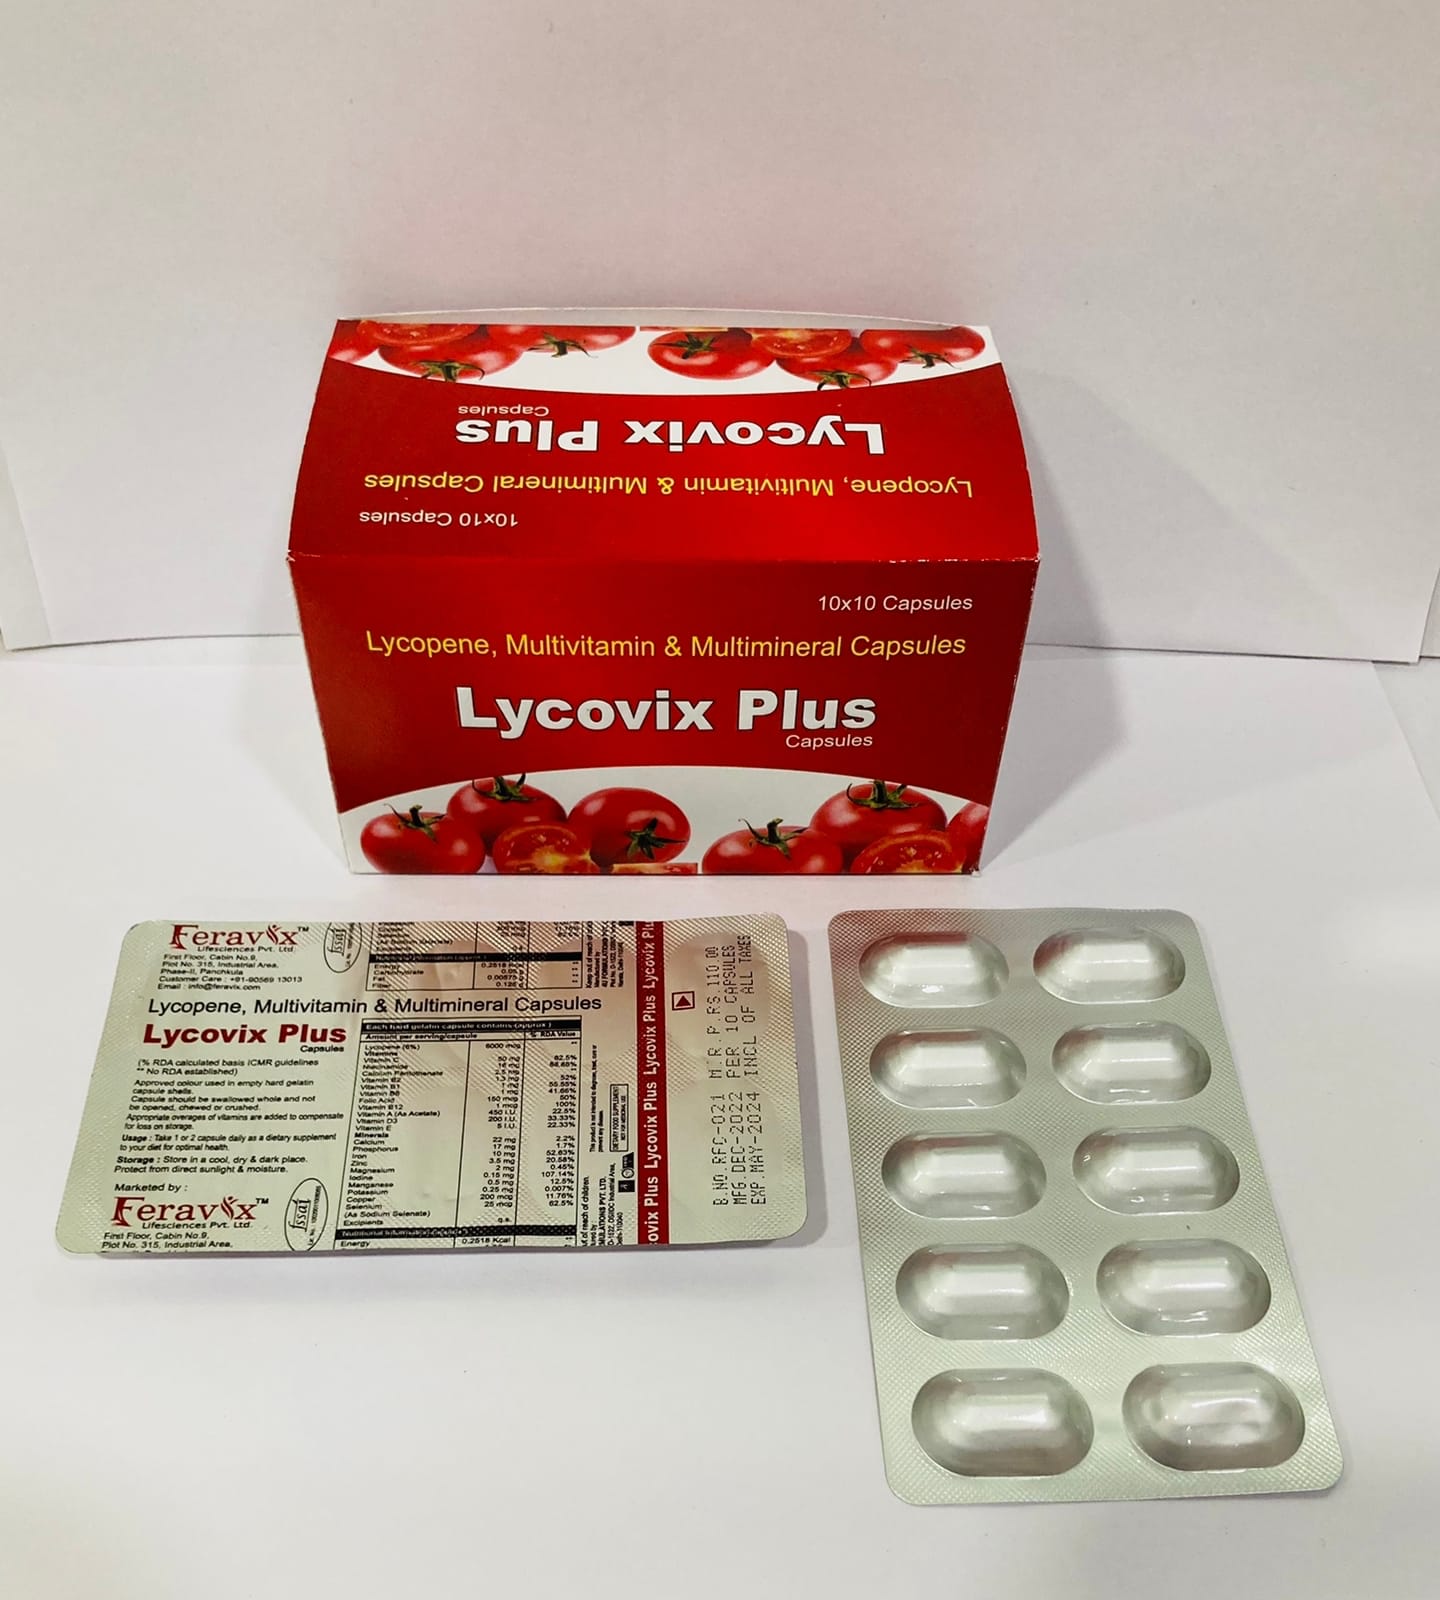 Product Name: LYCOVIX PLUS CAPSULE, Compositions of LYCOVIX PLUS CAPSULE are LYCOPENE, MULTIVITAMIN & MULTIMINERAL CAPSULES - Feravix Lifesciences